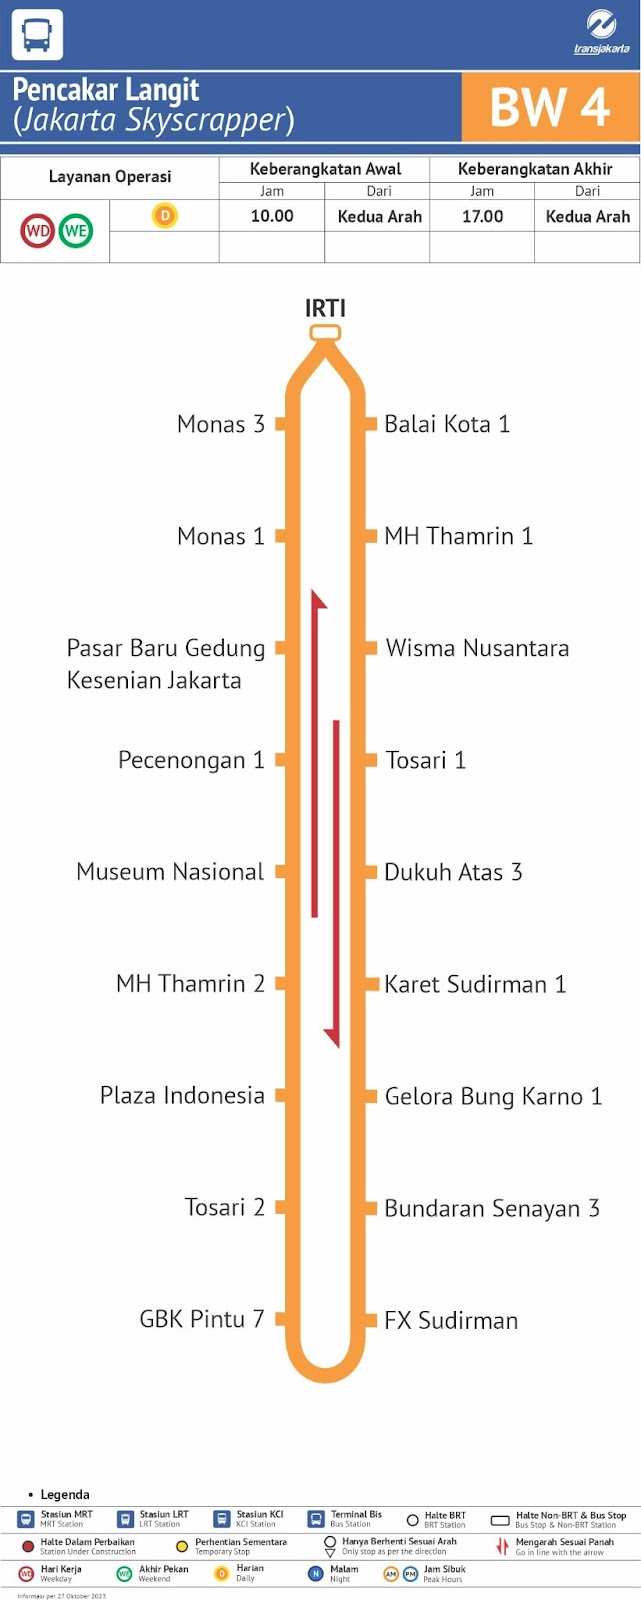 BW4: Jakarta Skyscrapers route map. Source:&nbsp;transjakarta.co.id